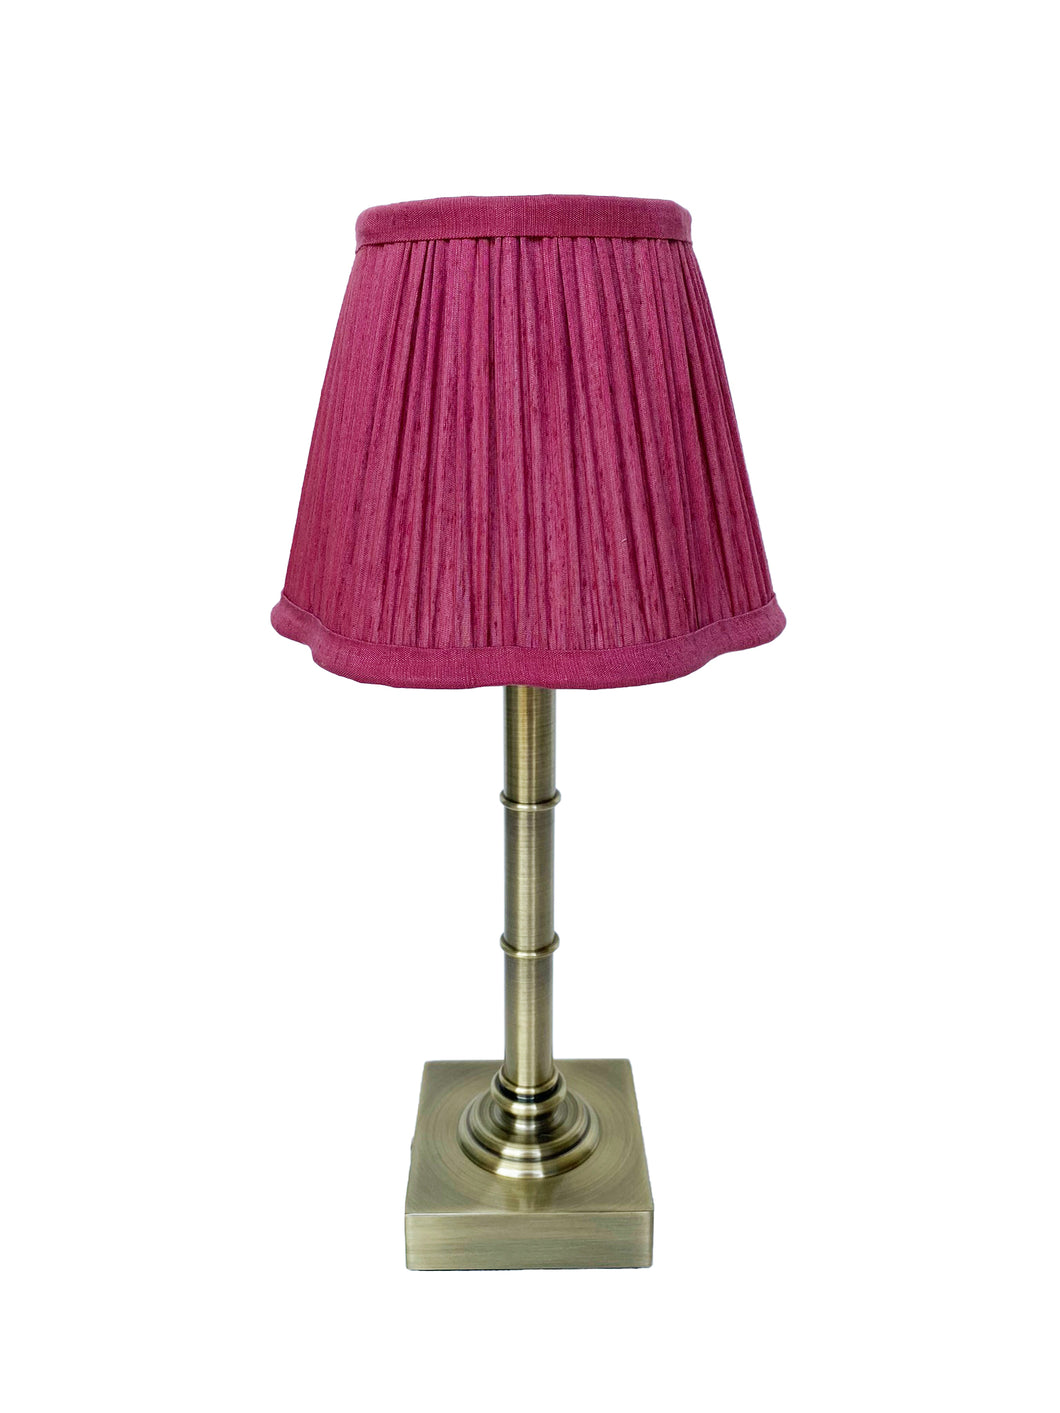 16cm burgundy scalloped lampshade